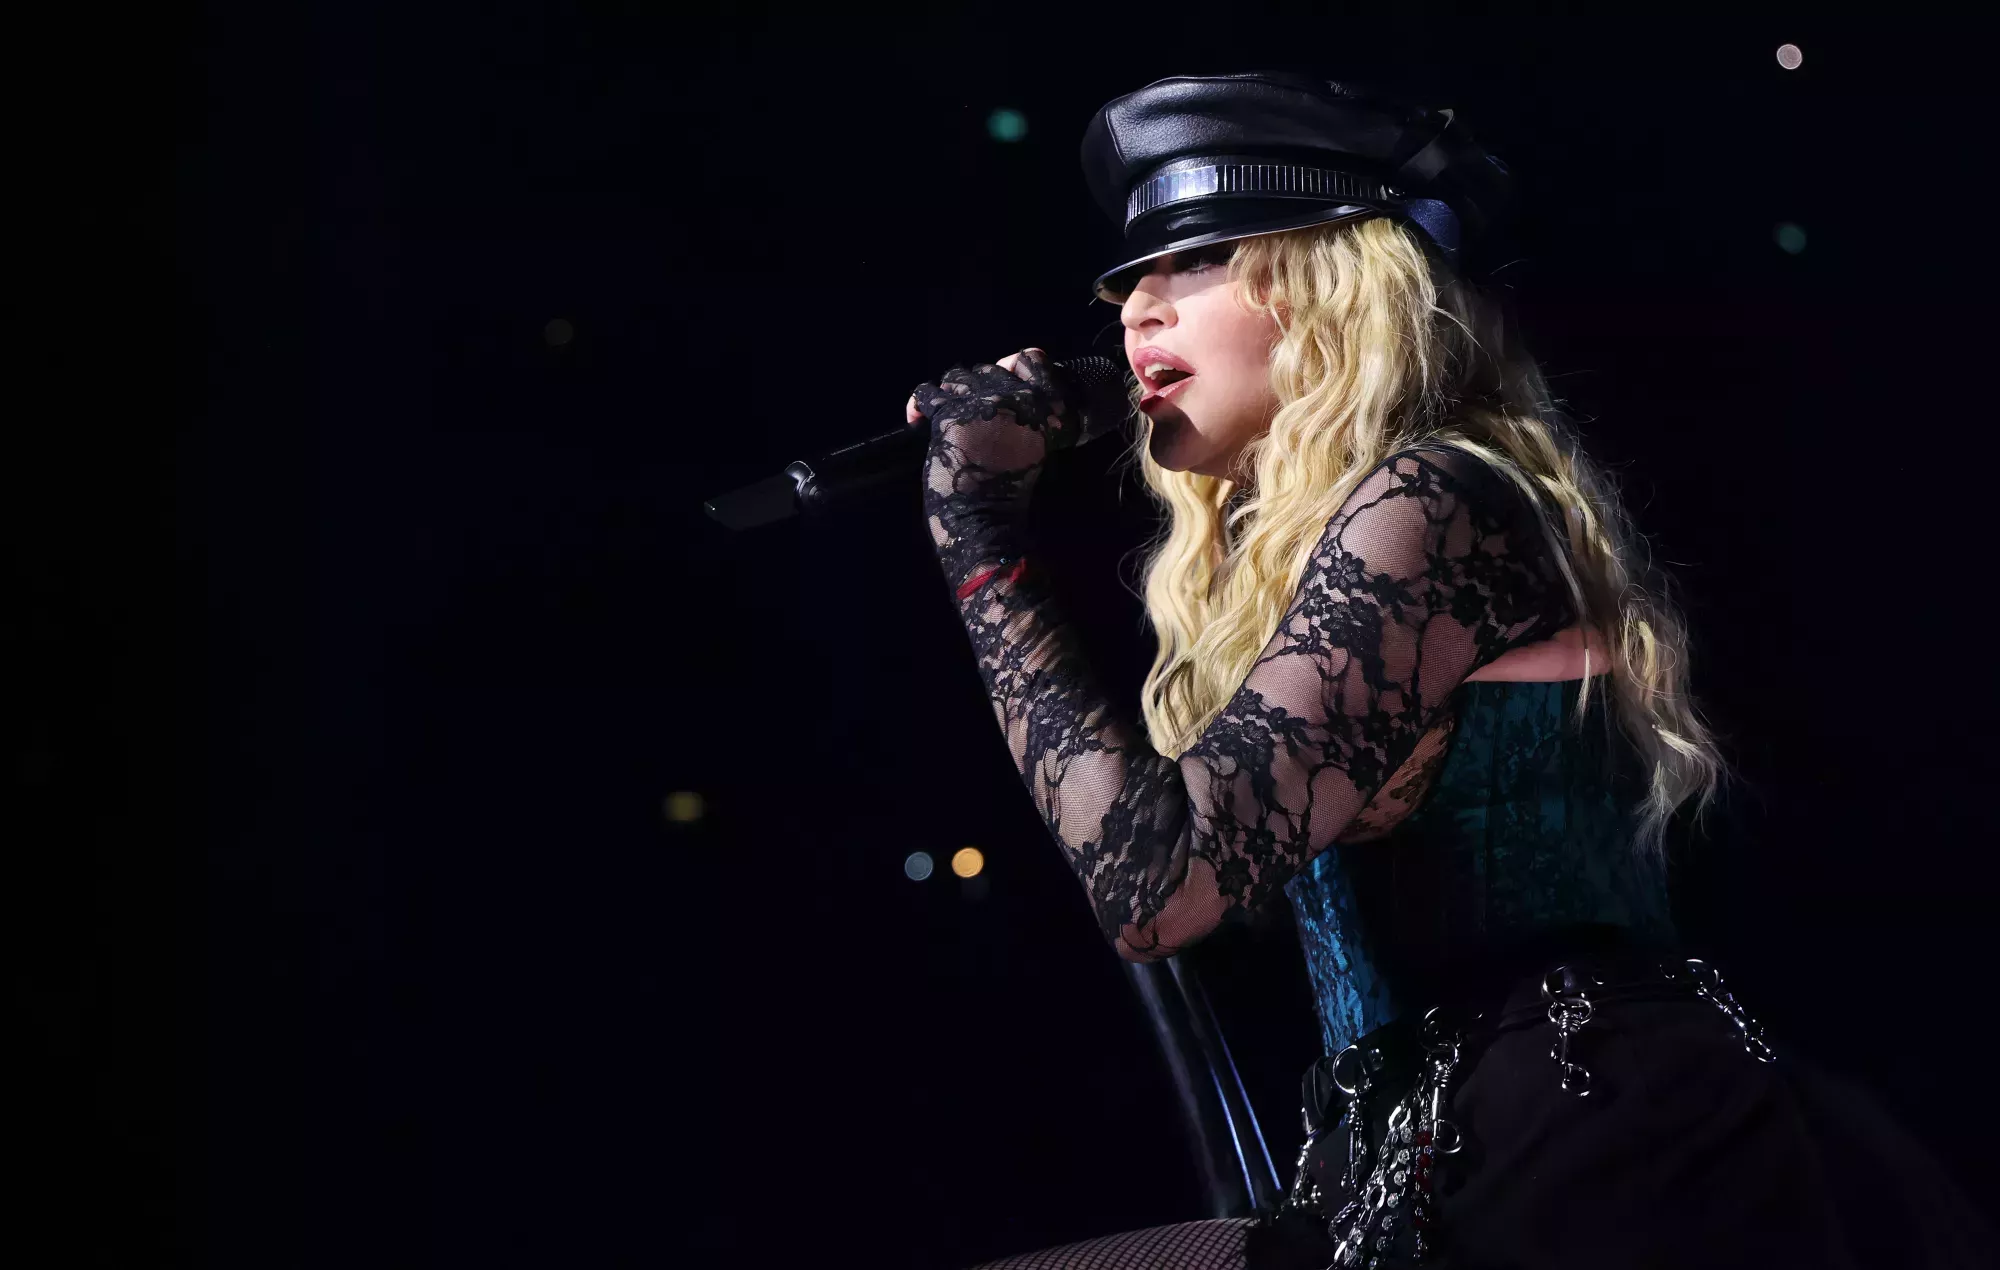 La voz de Madonna en el 'Celebration Tour' es 